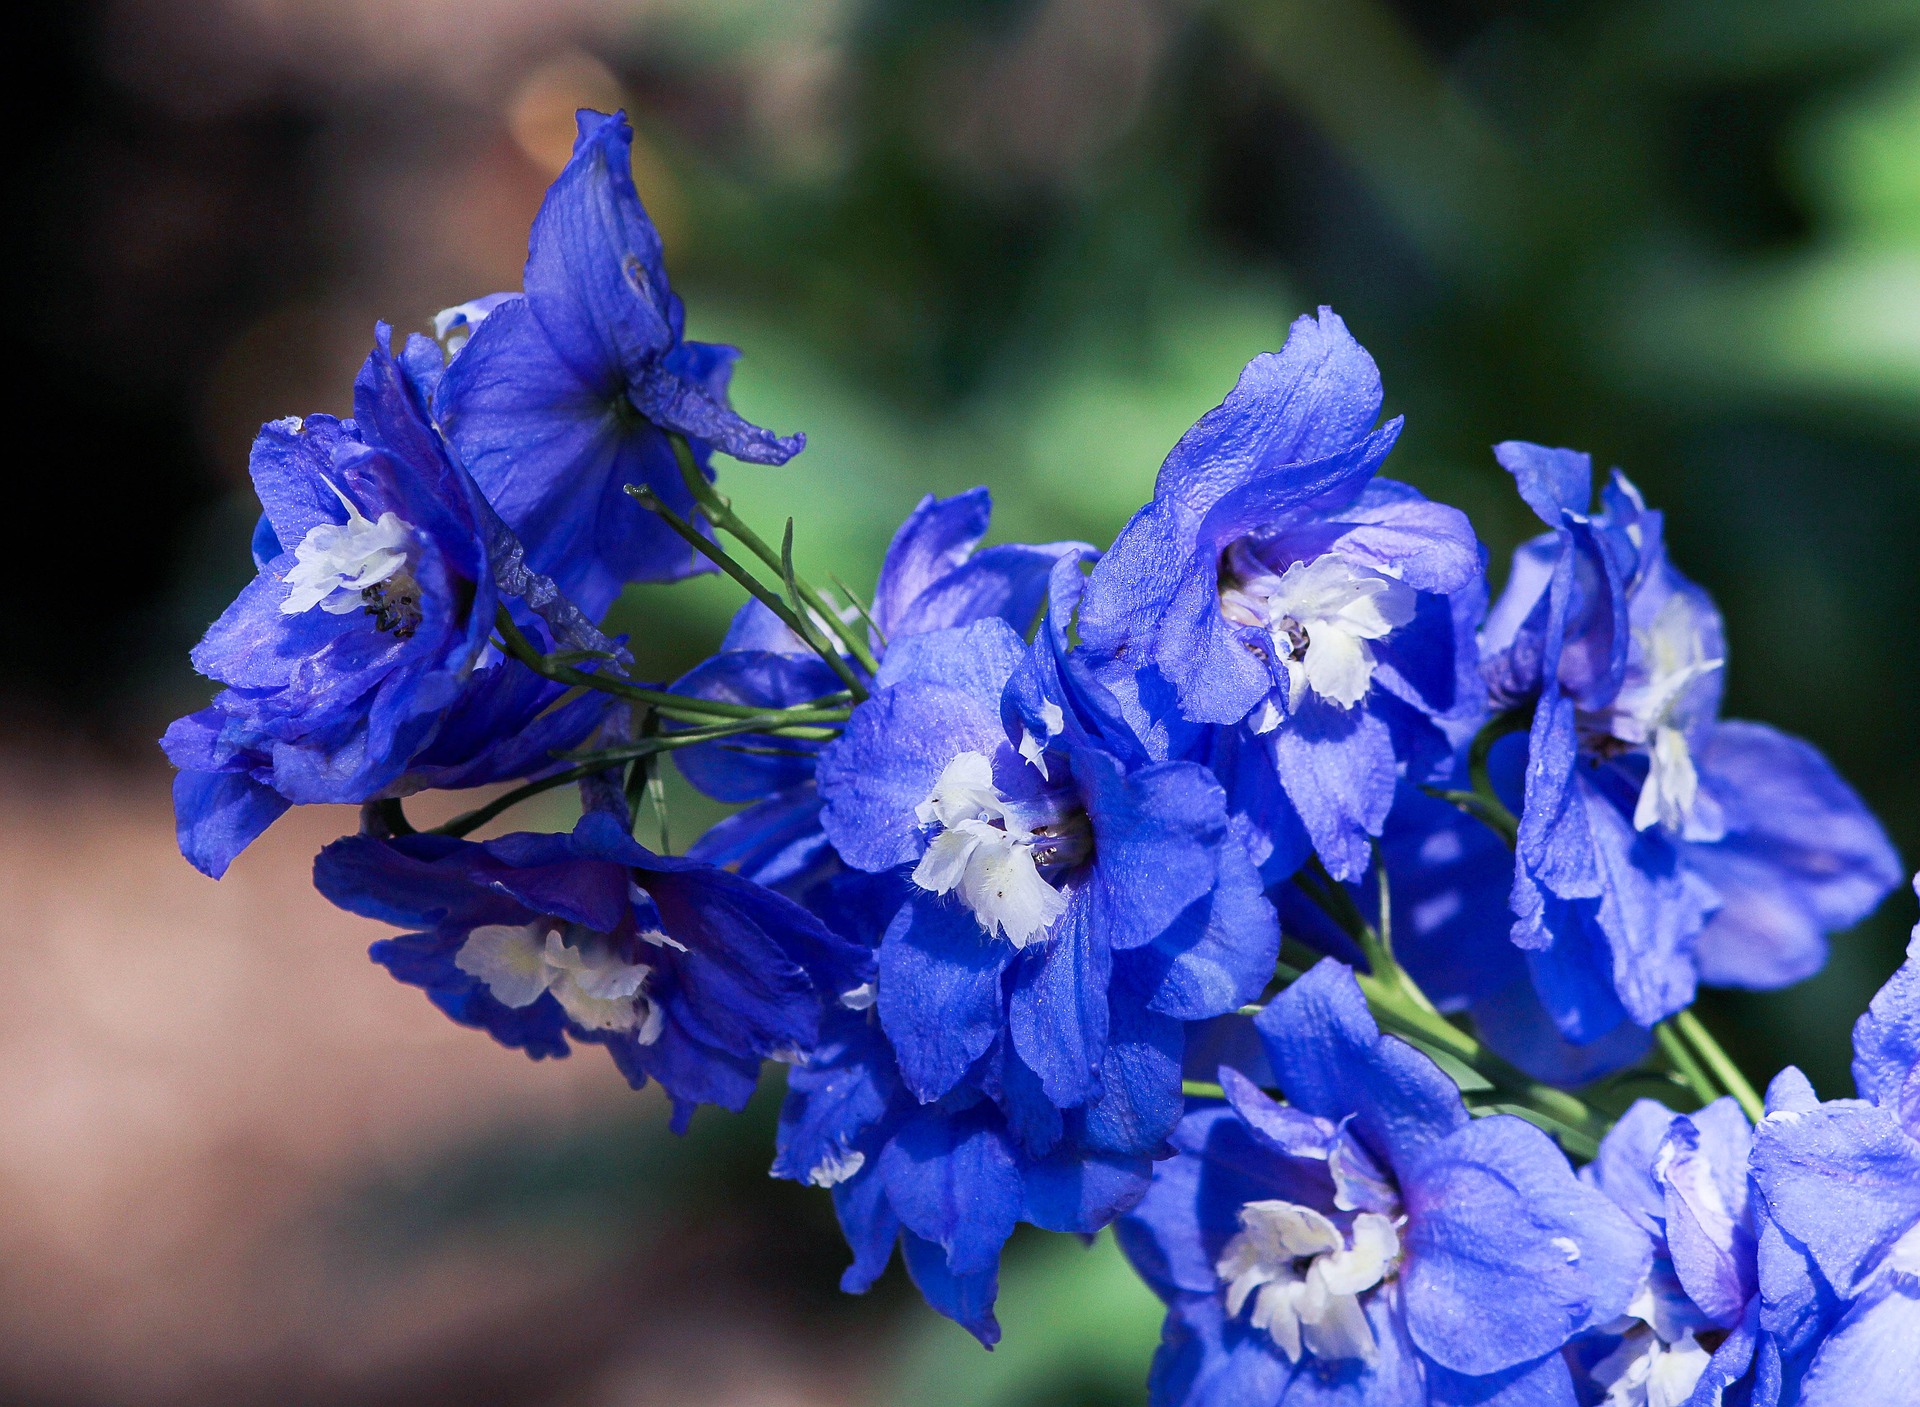 A close-up of dark blue delphinium flowers